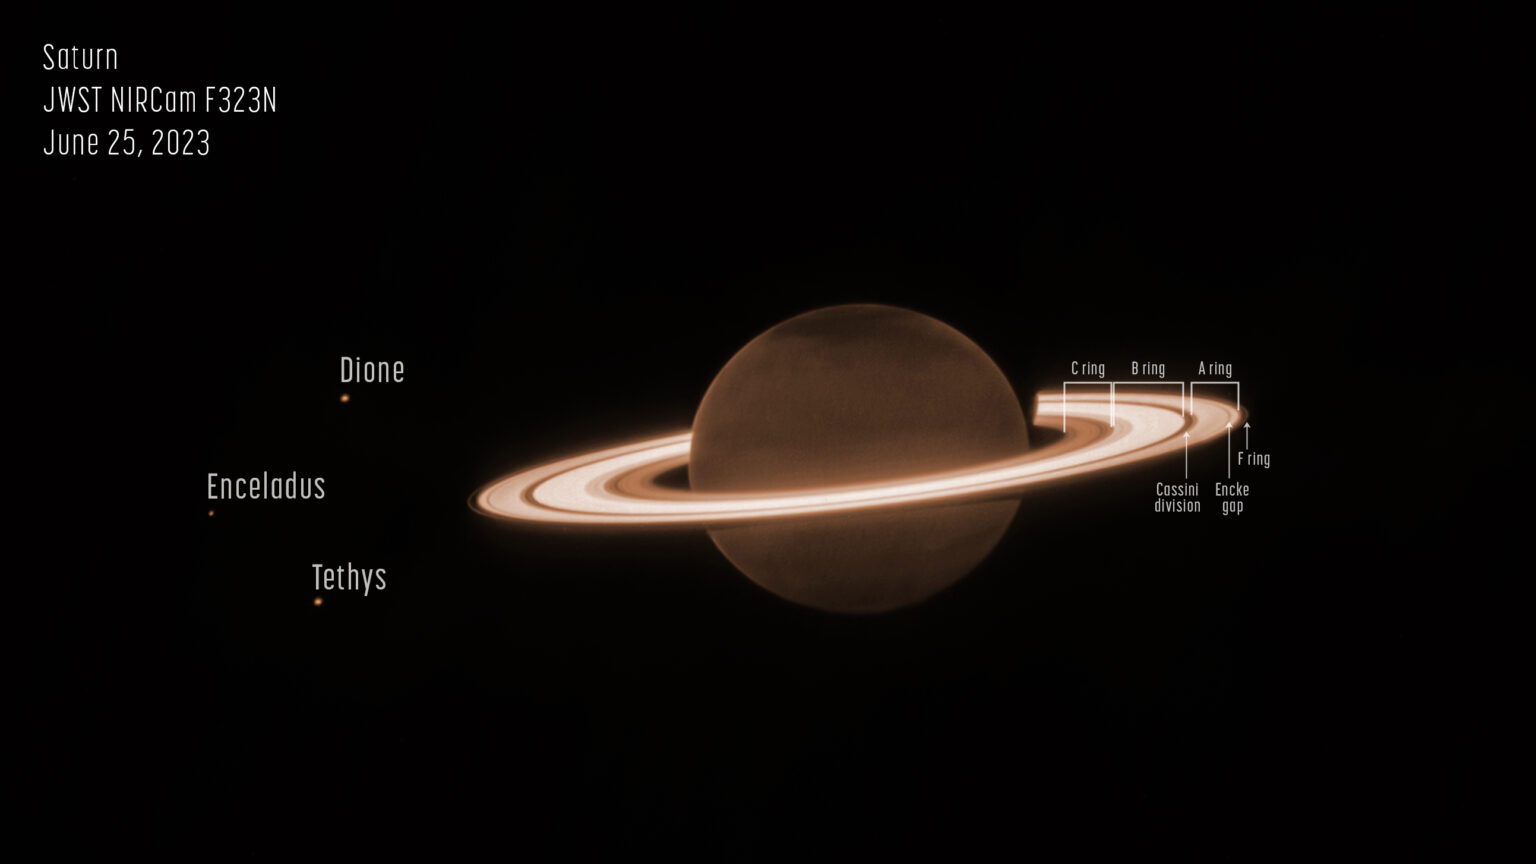 Saturn by JWST